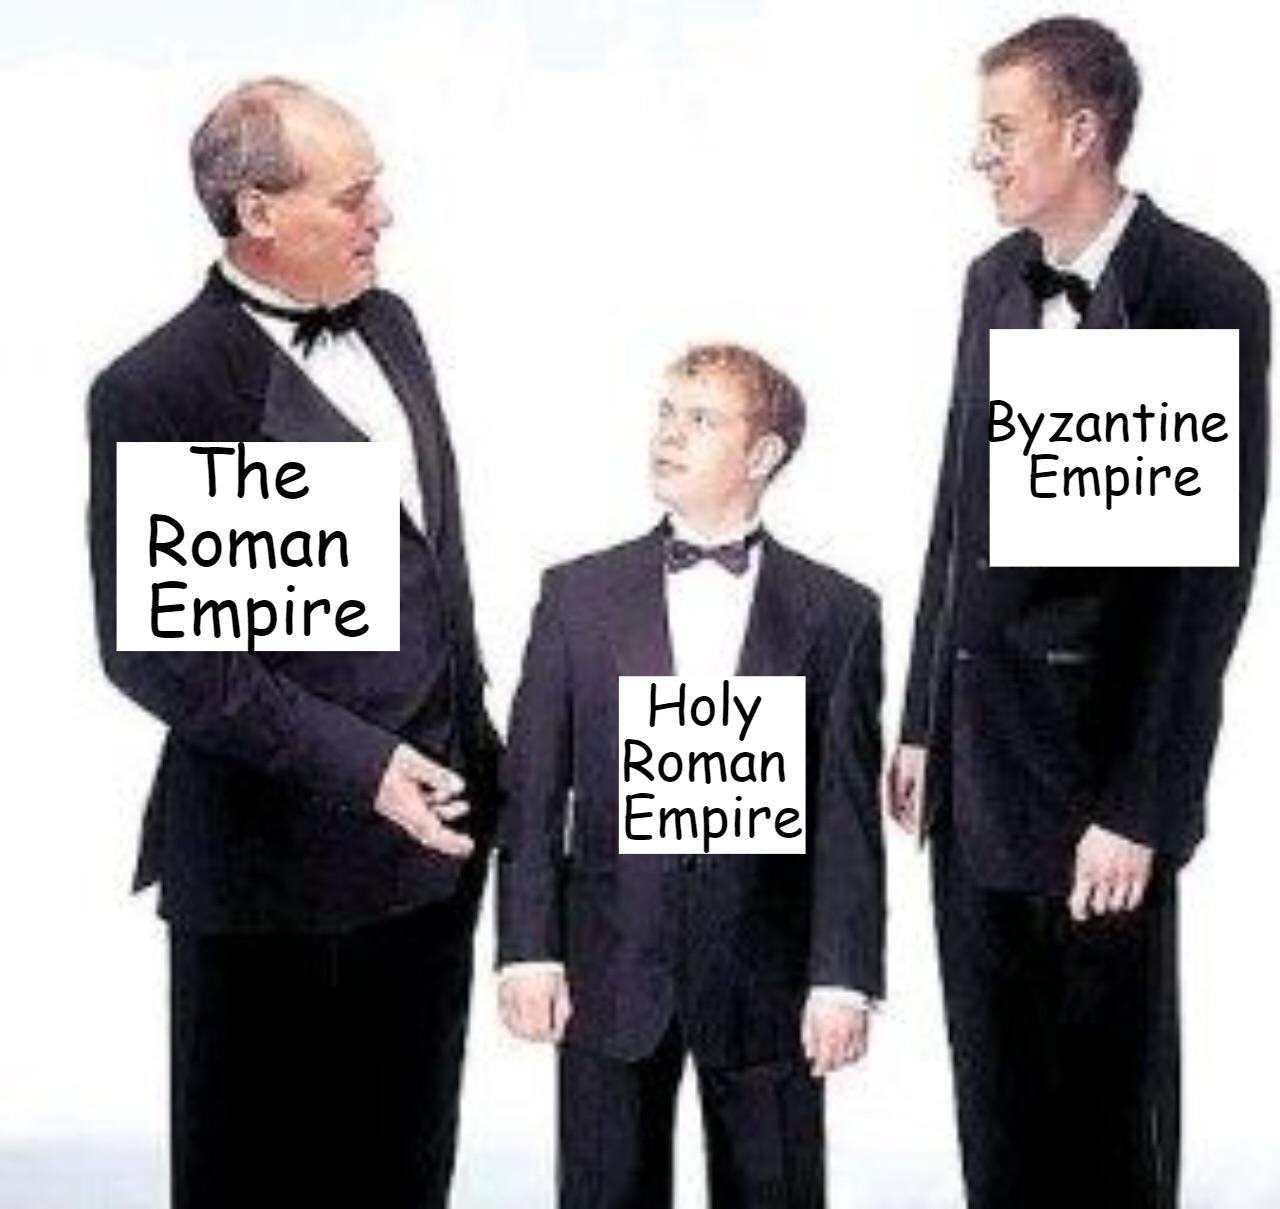 Roman, Byz and Holy Roman